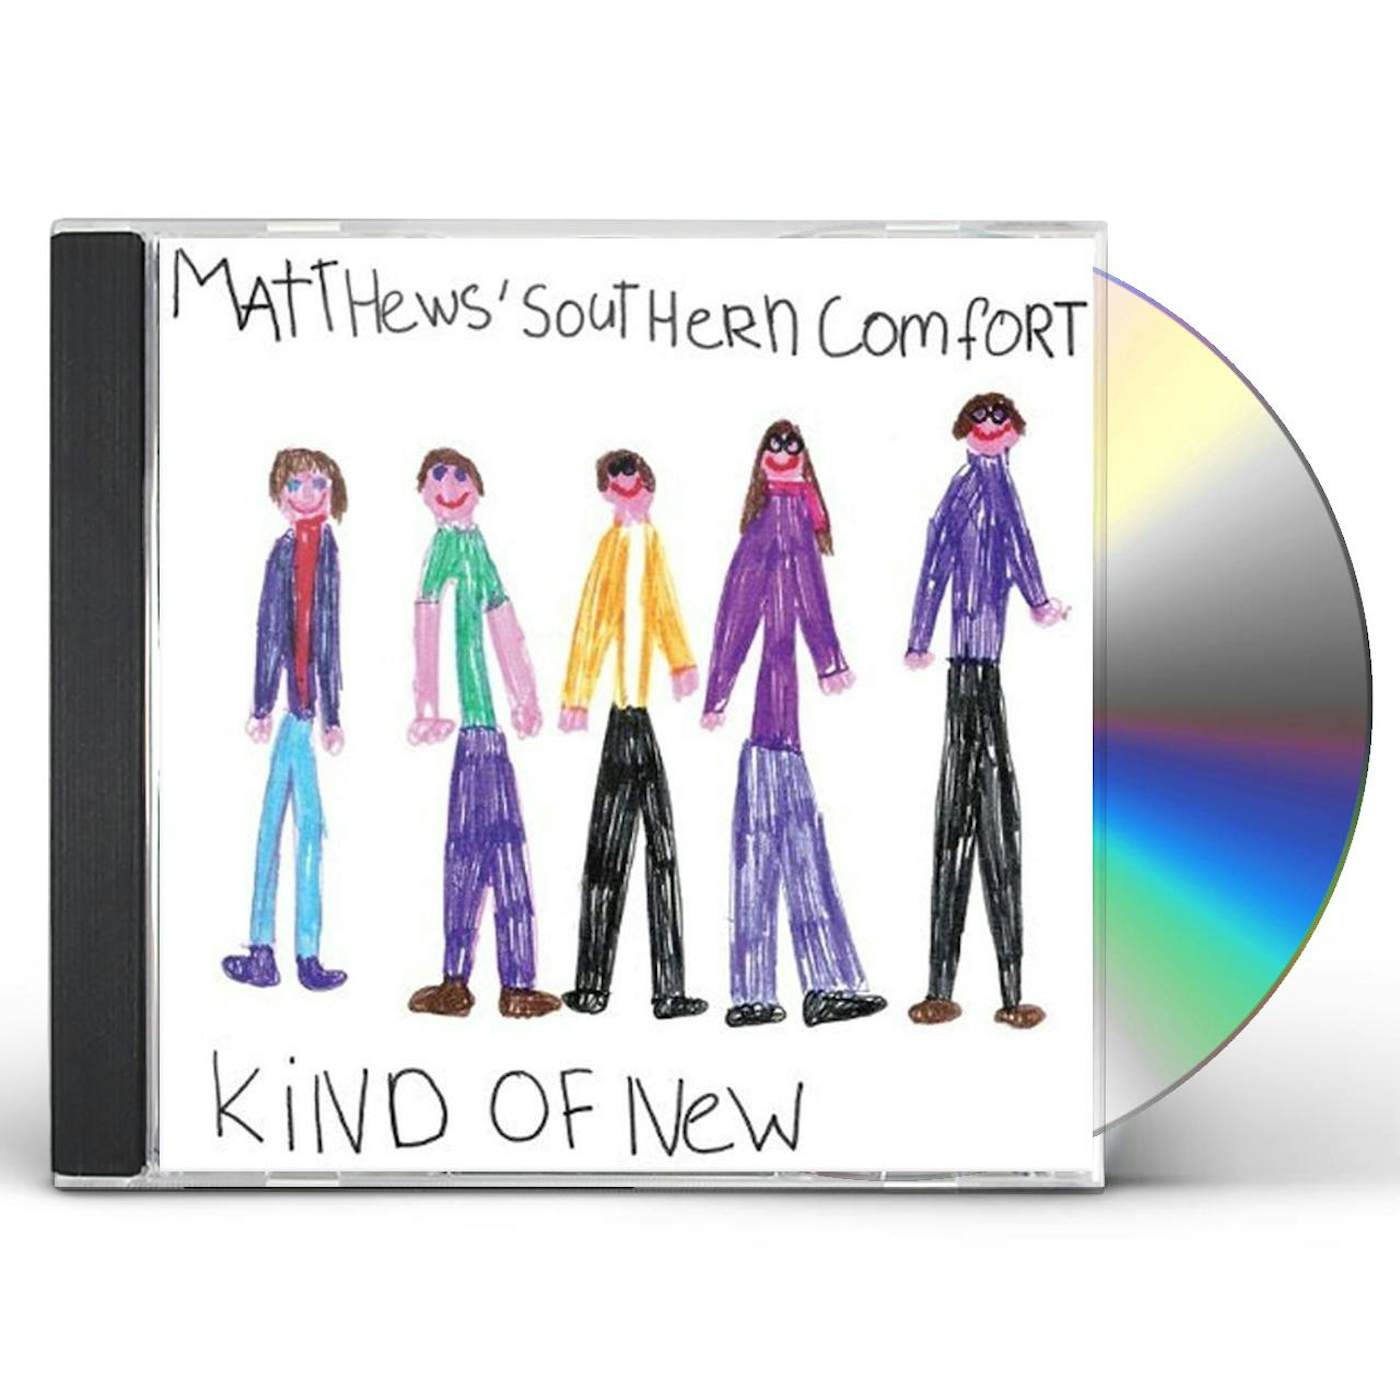 Matthews' Southern Comfort KIND OF NEW CD